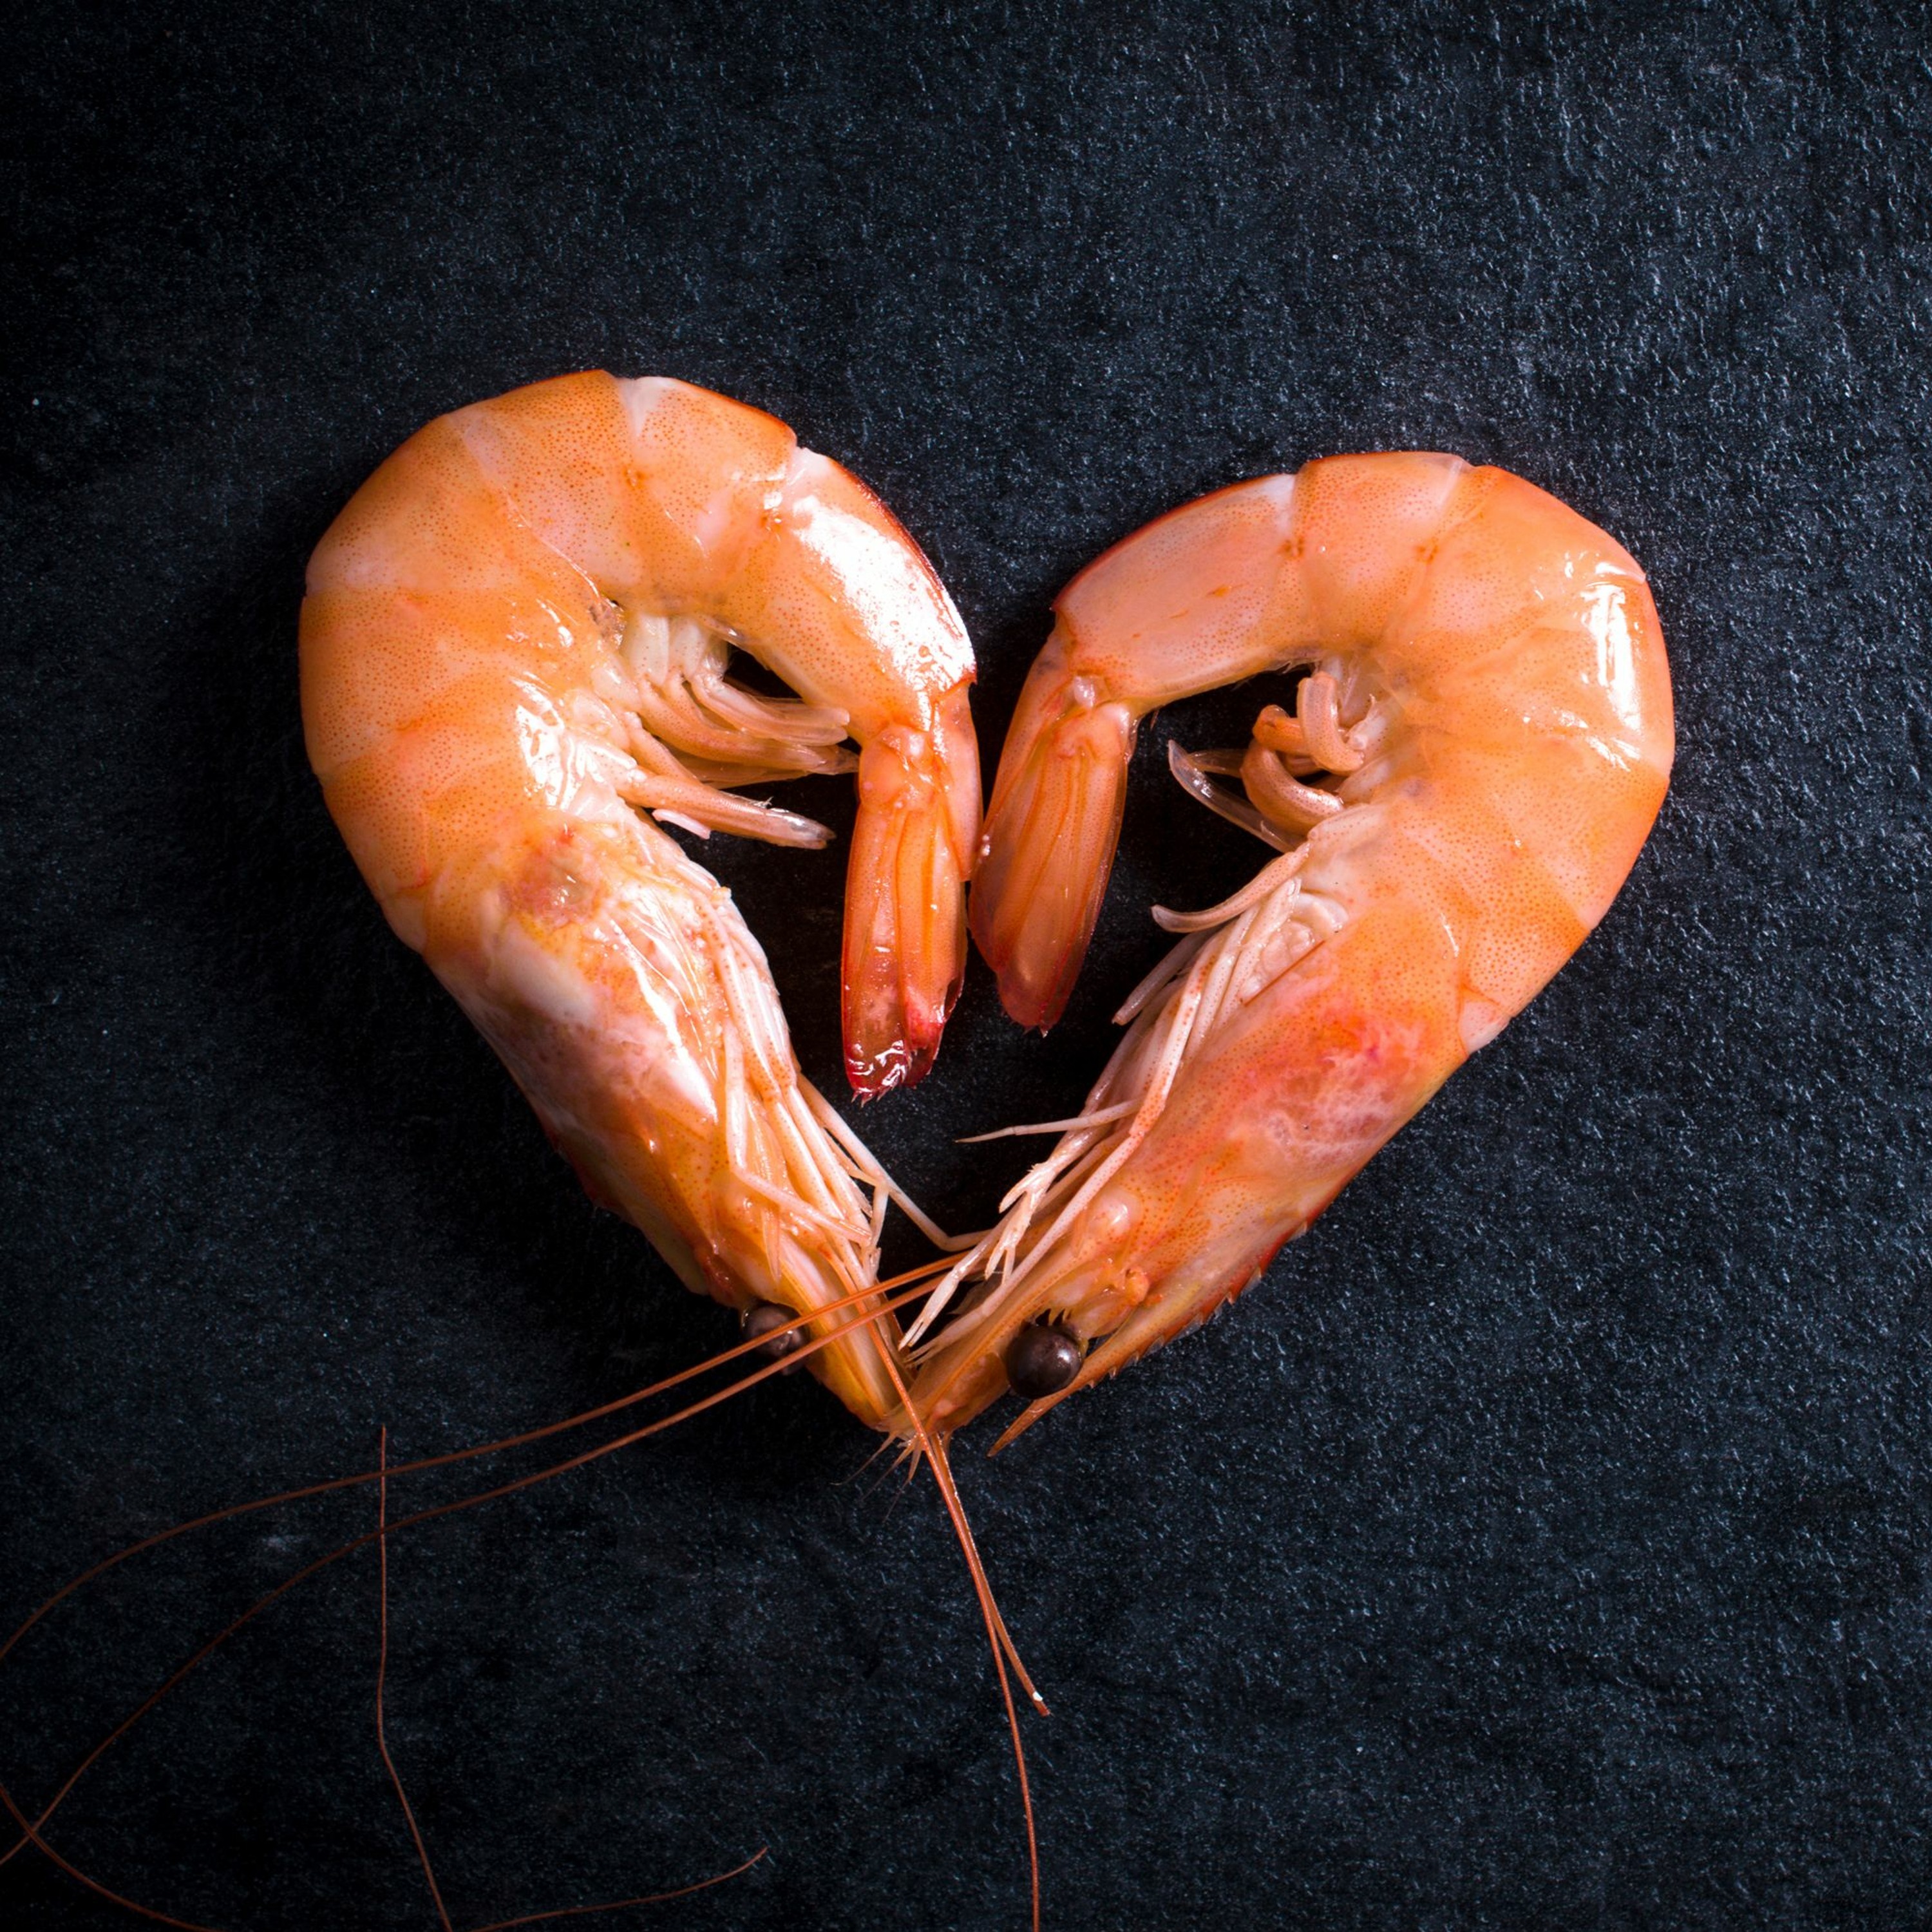 Podquisition 347: Shrimp Are Perfect